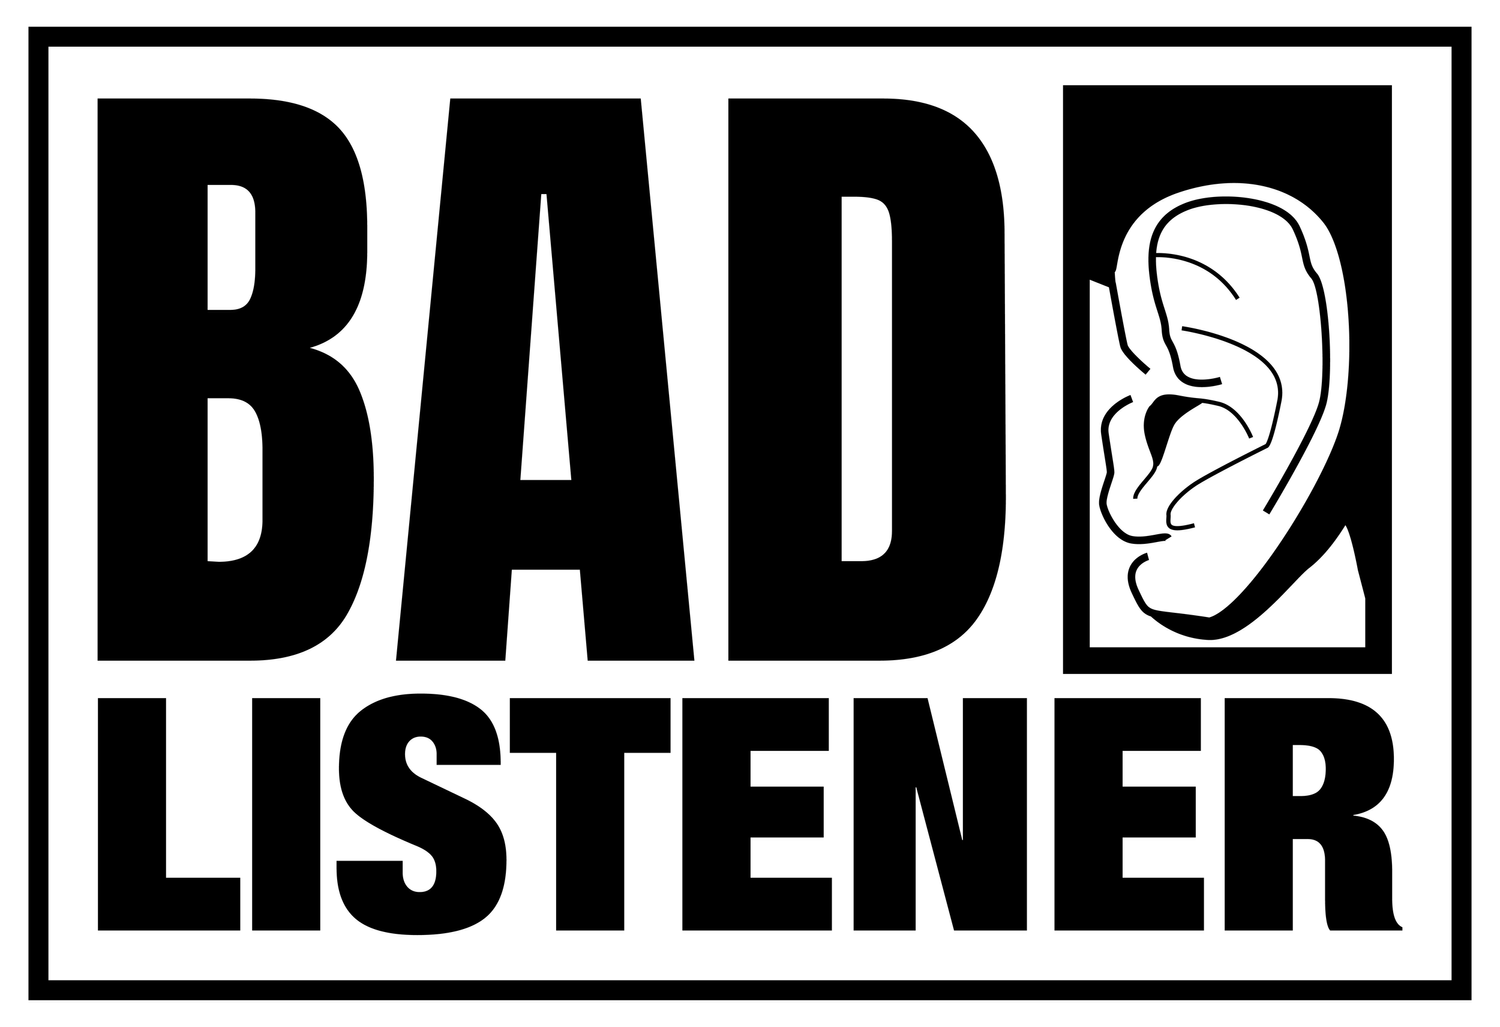 BAD LISTENER